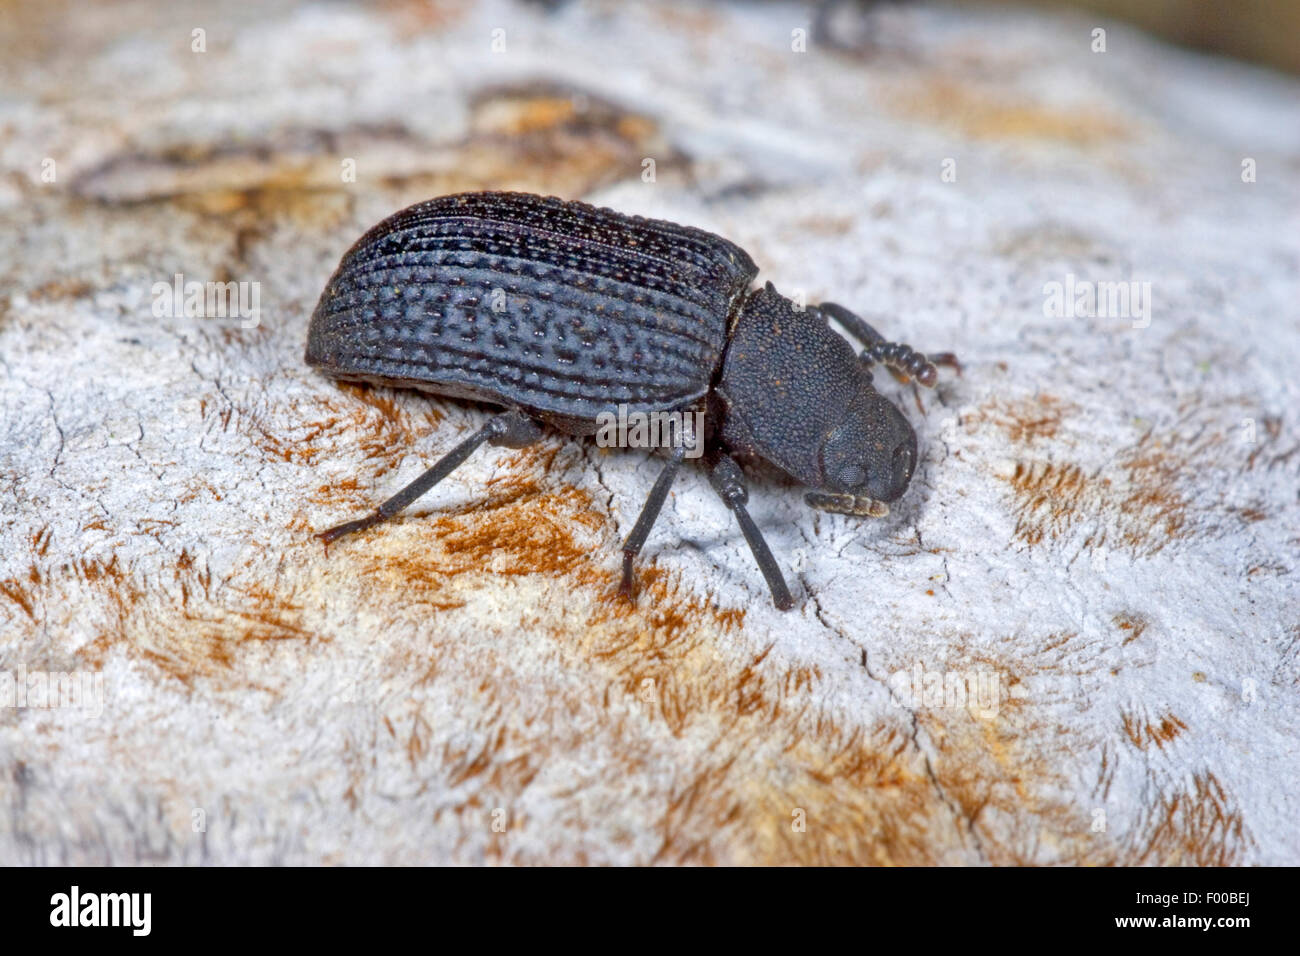 Black Tinder Fungus Beetle (Bolitophagus reticulatus), on a bracket fungus, Germany Stock Photo